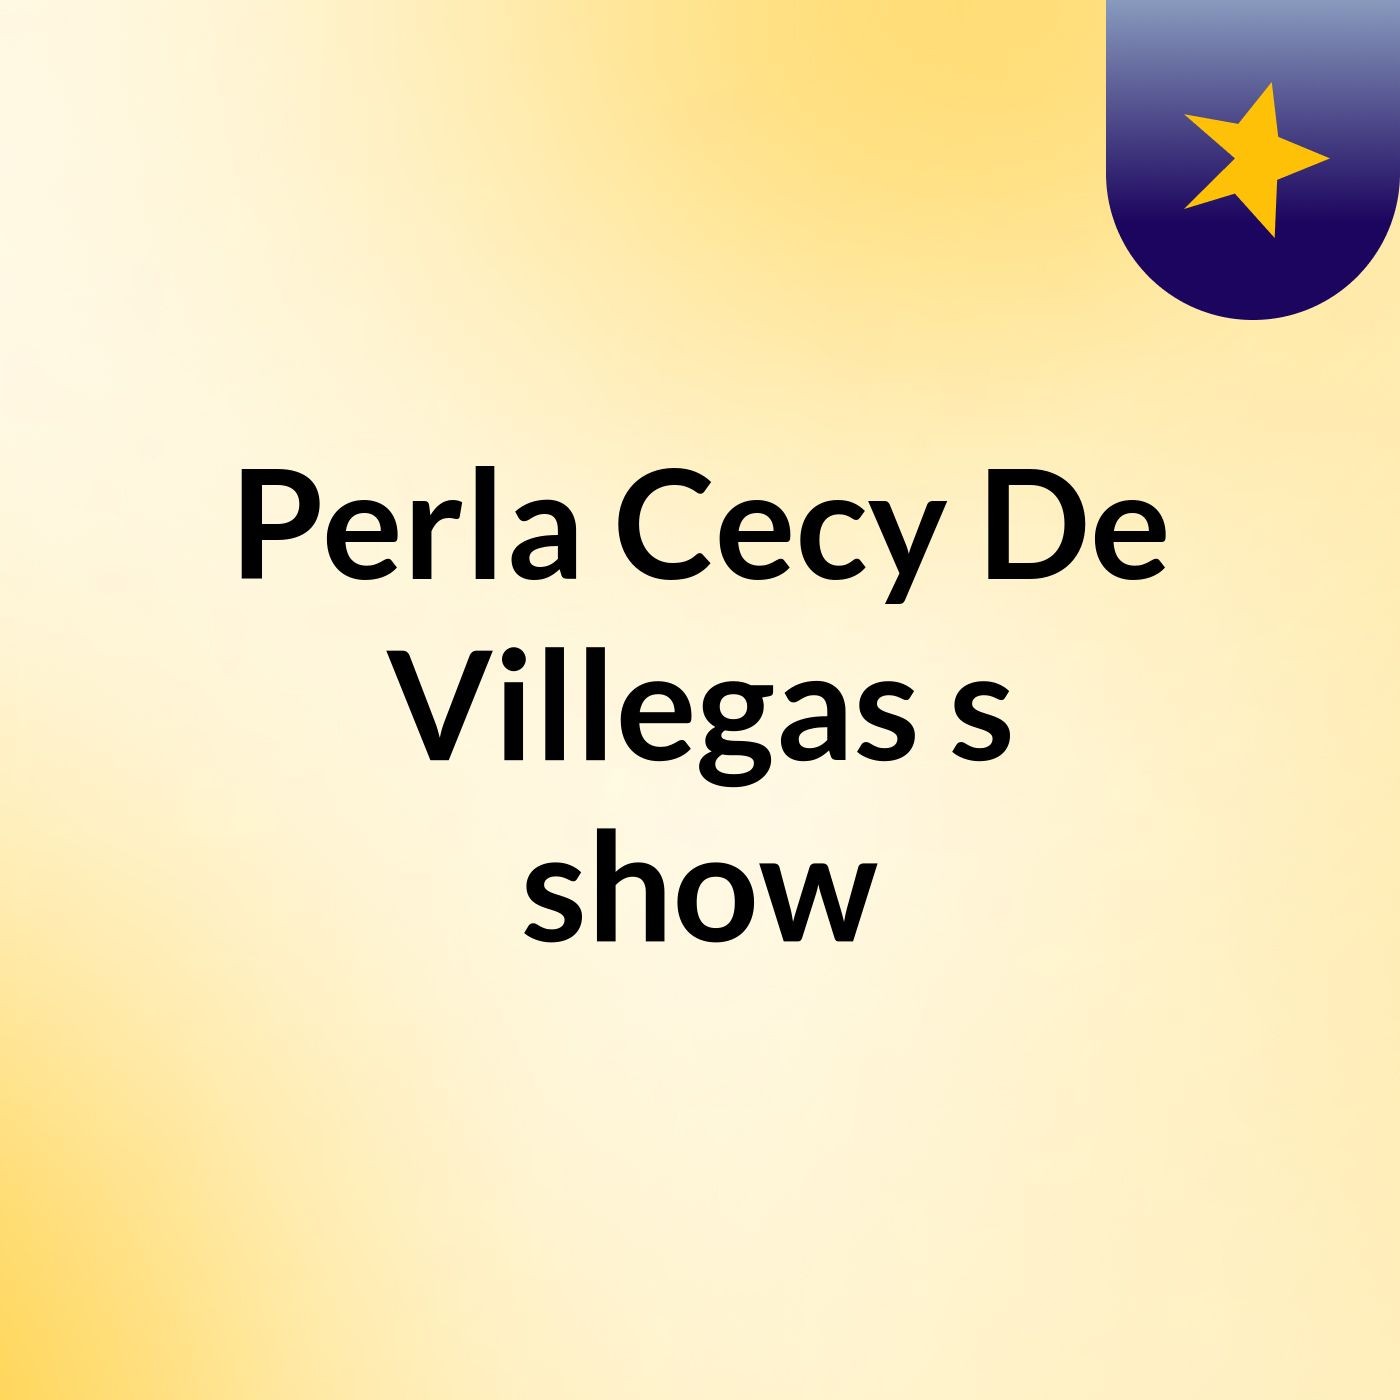 Perla Cecy De Villegas's show